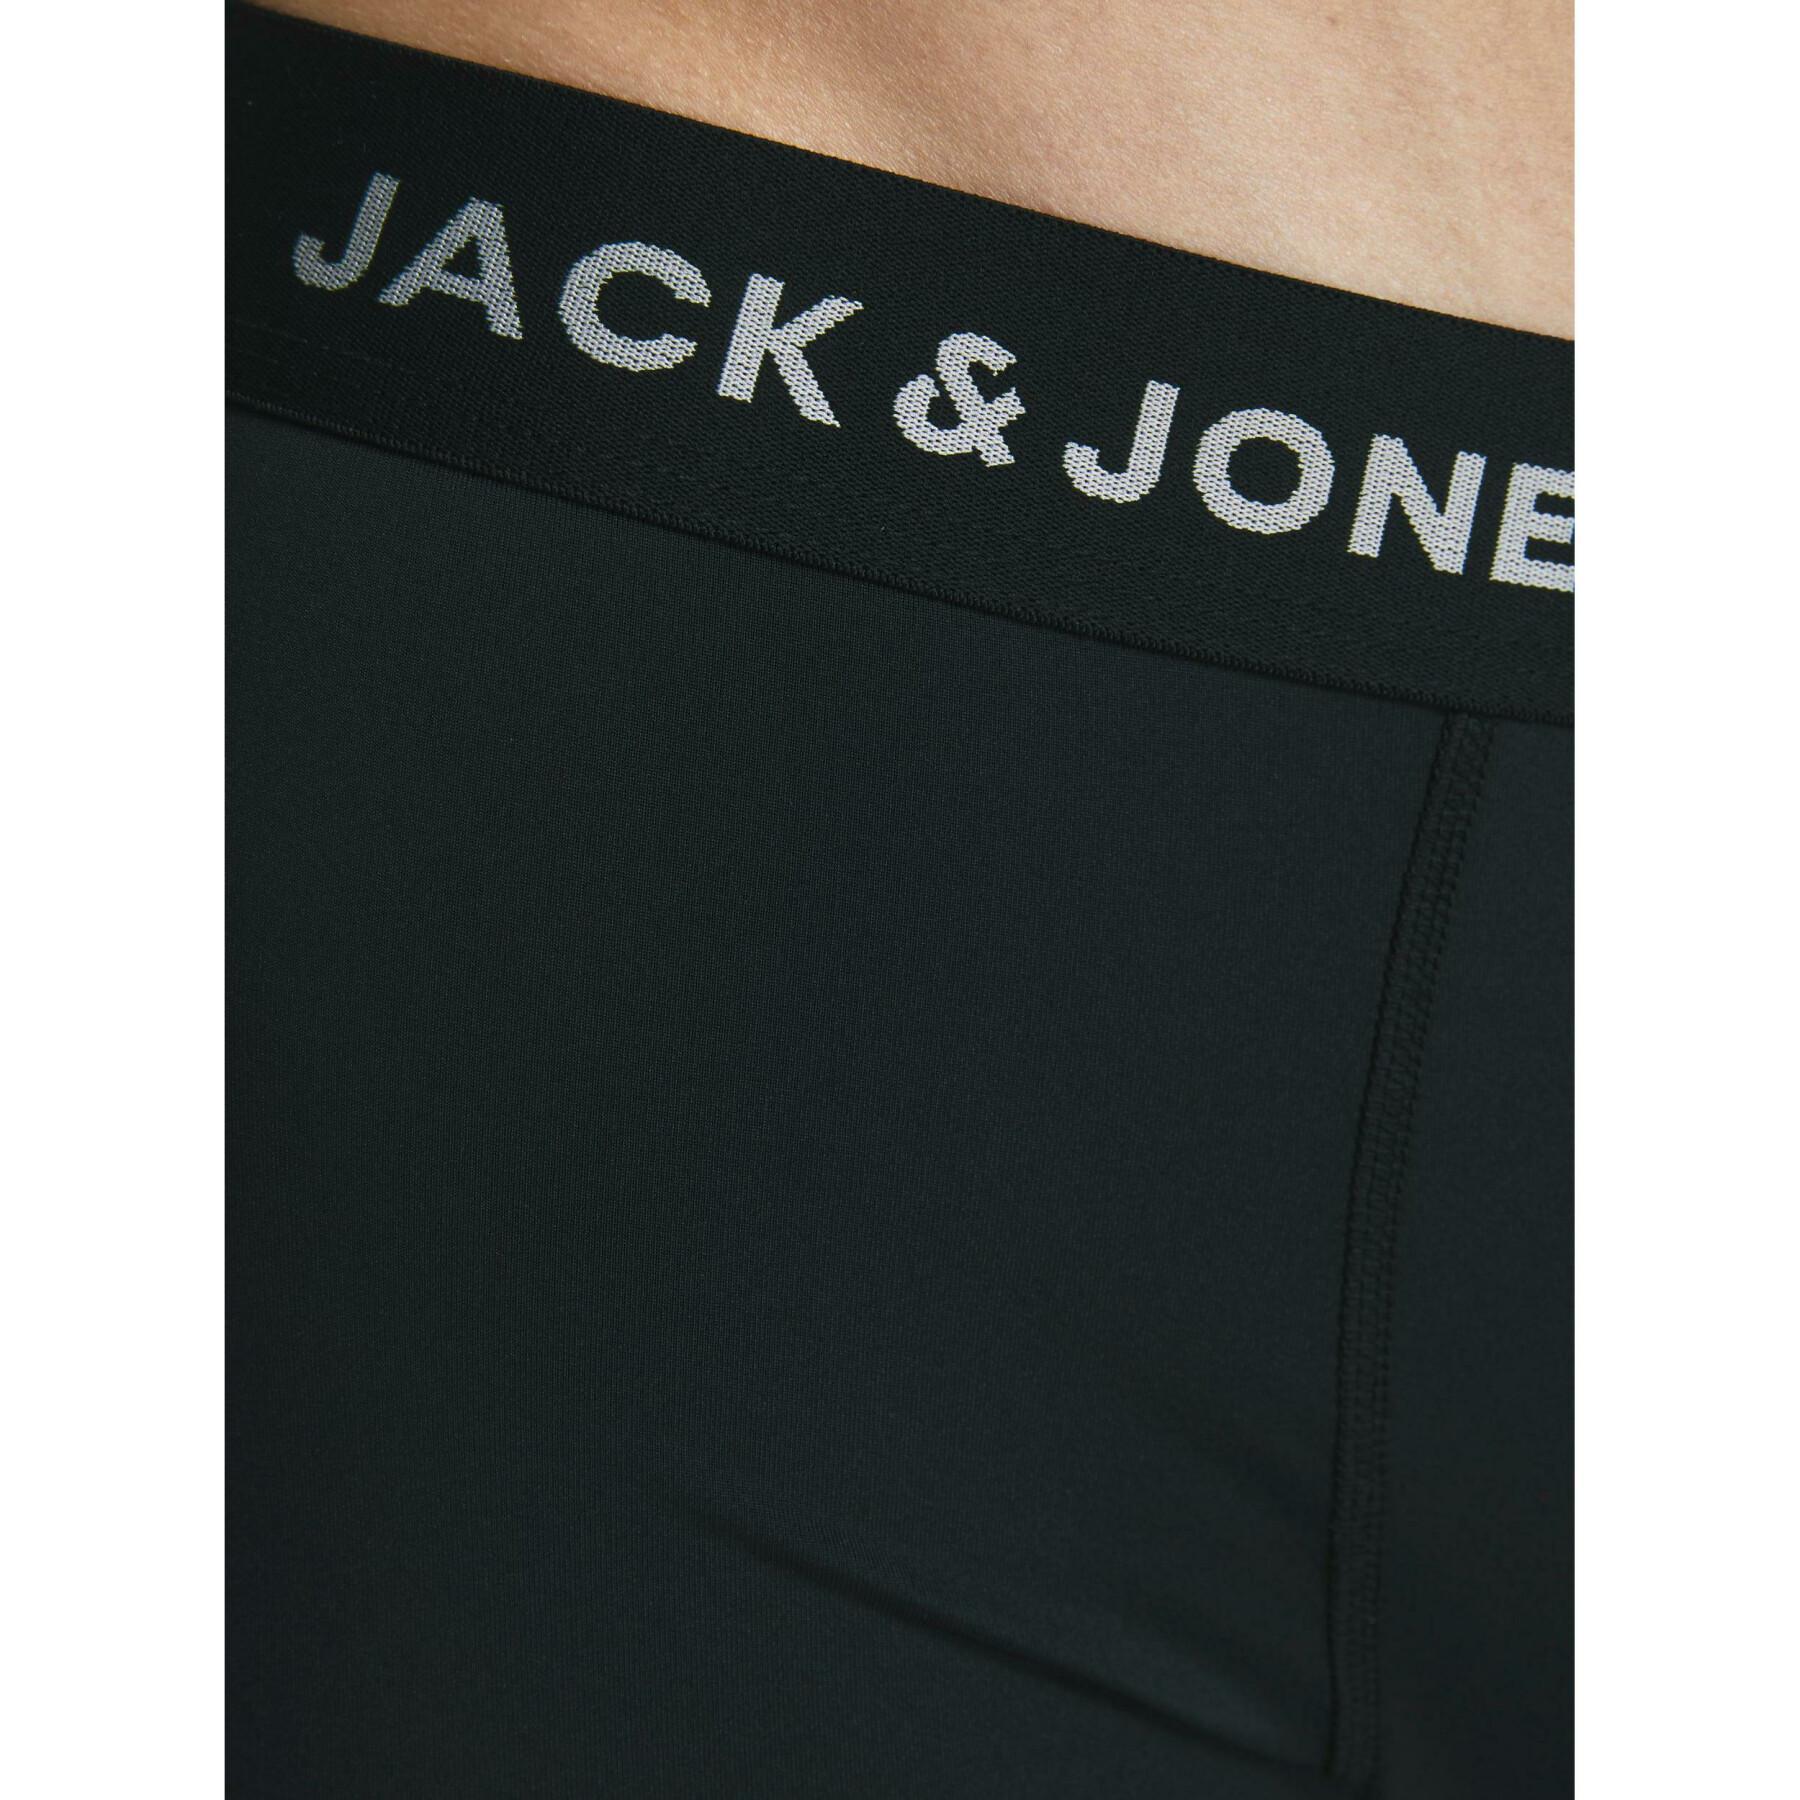 Set of 3 boxer shorts Jack & Jones Jacmircofibre